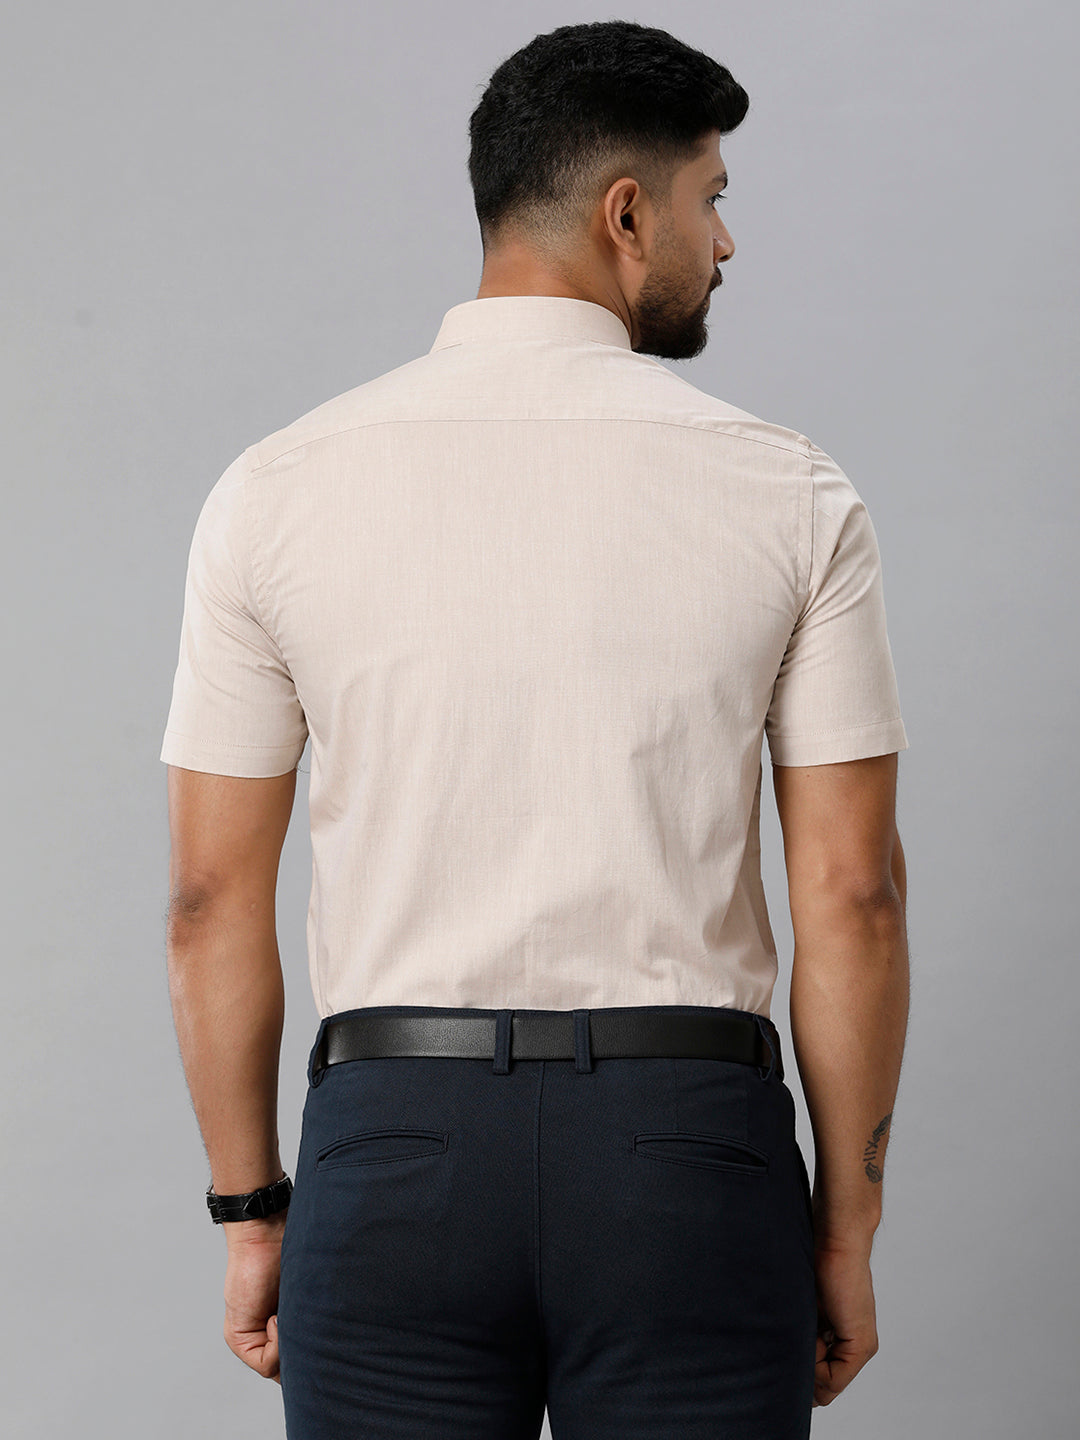 Mens Premium Cotton Formal Shirt Half Sleeves Light Brown MH G113-Back view